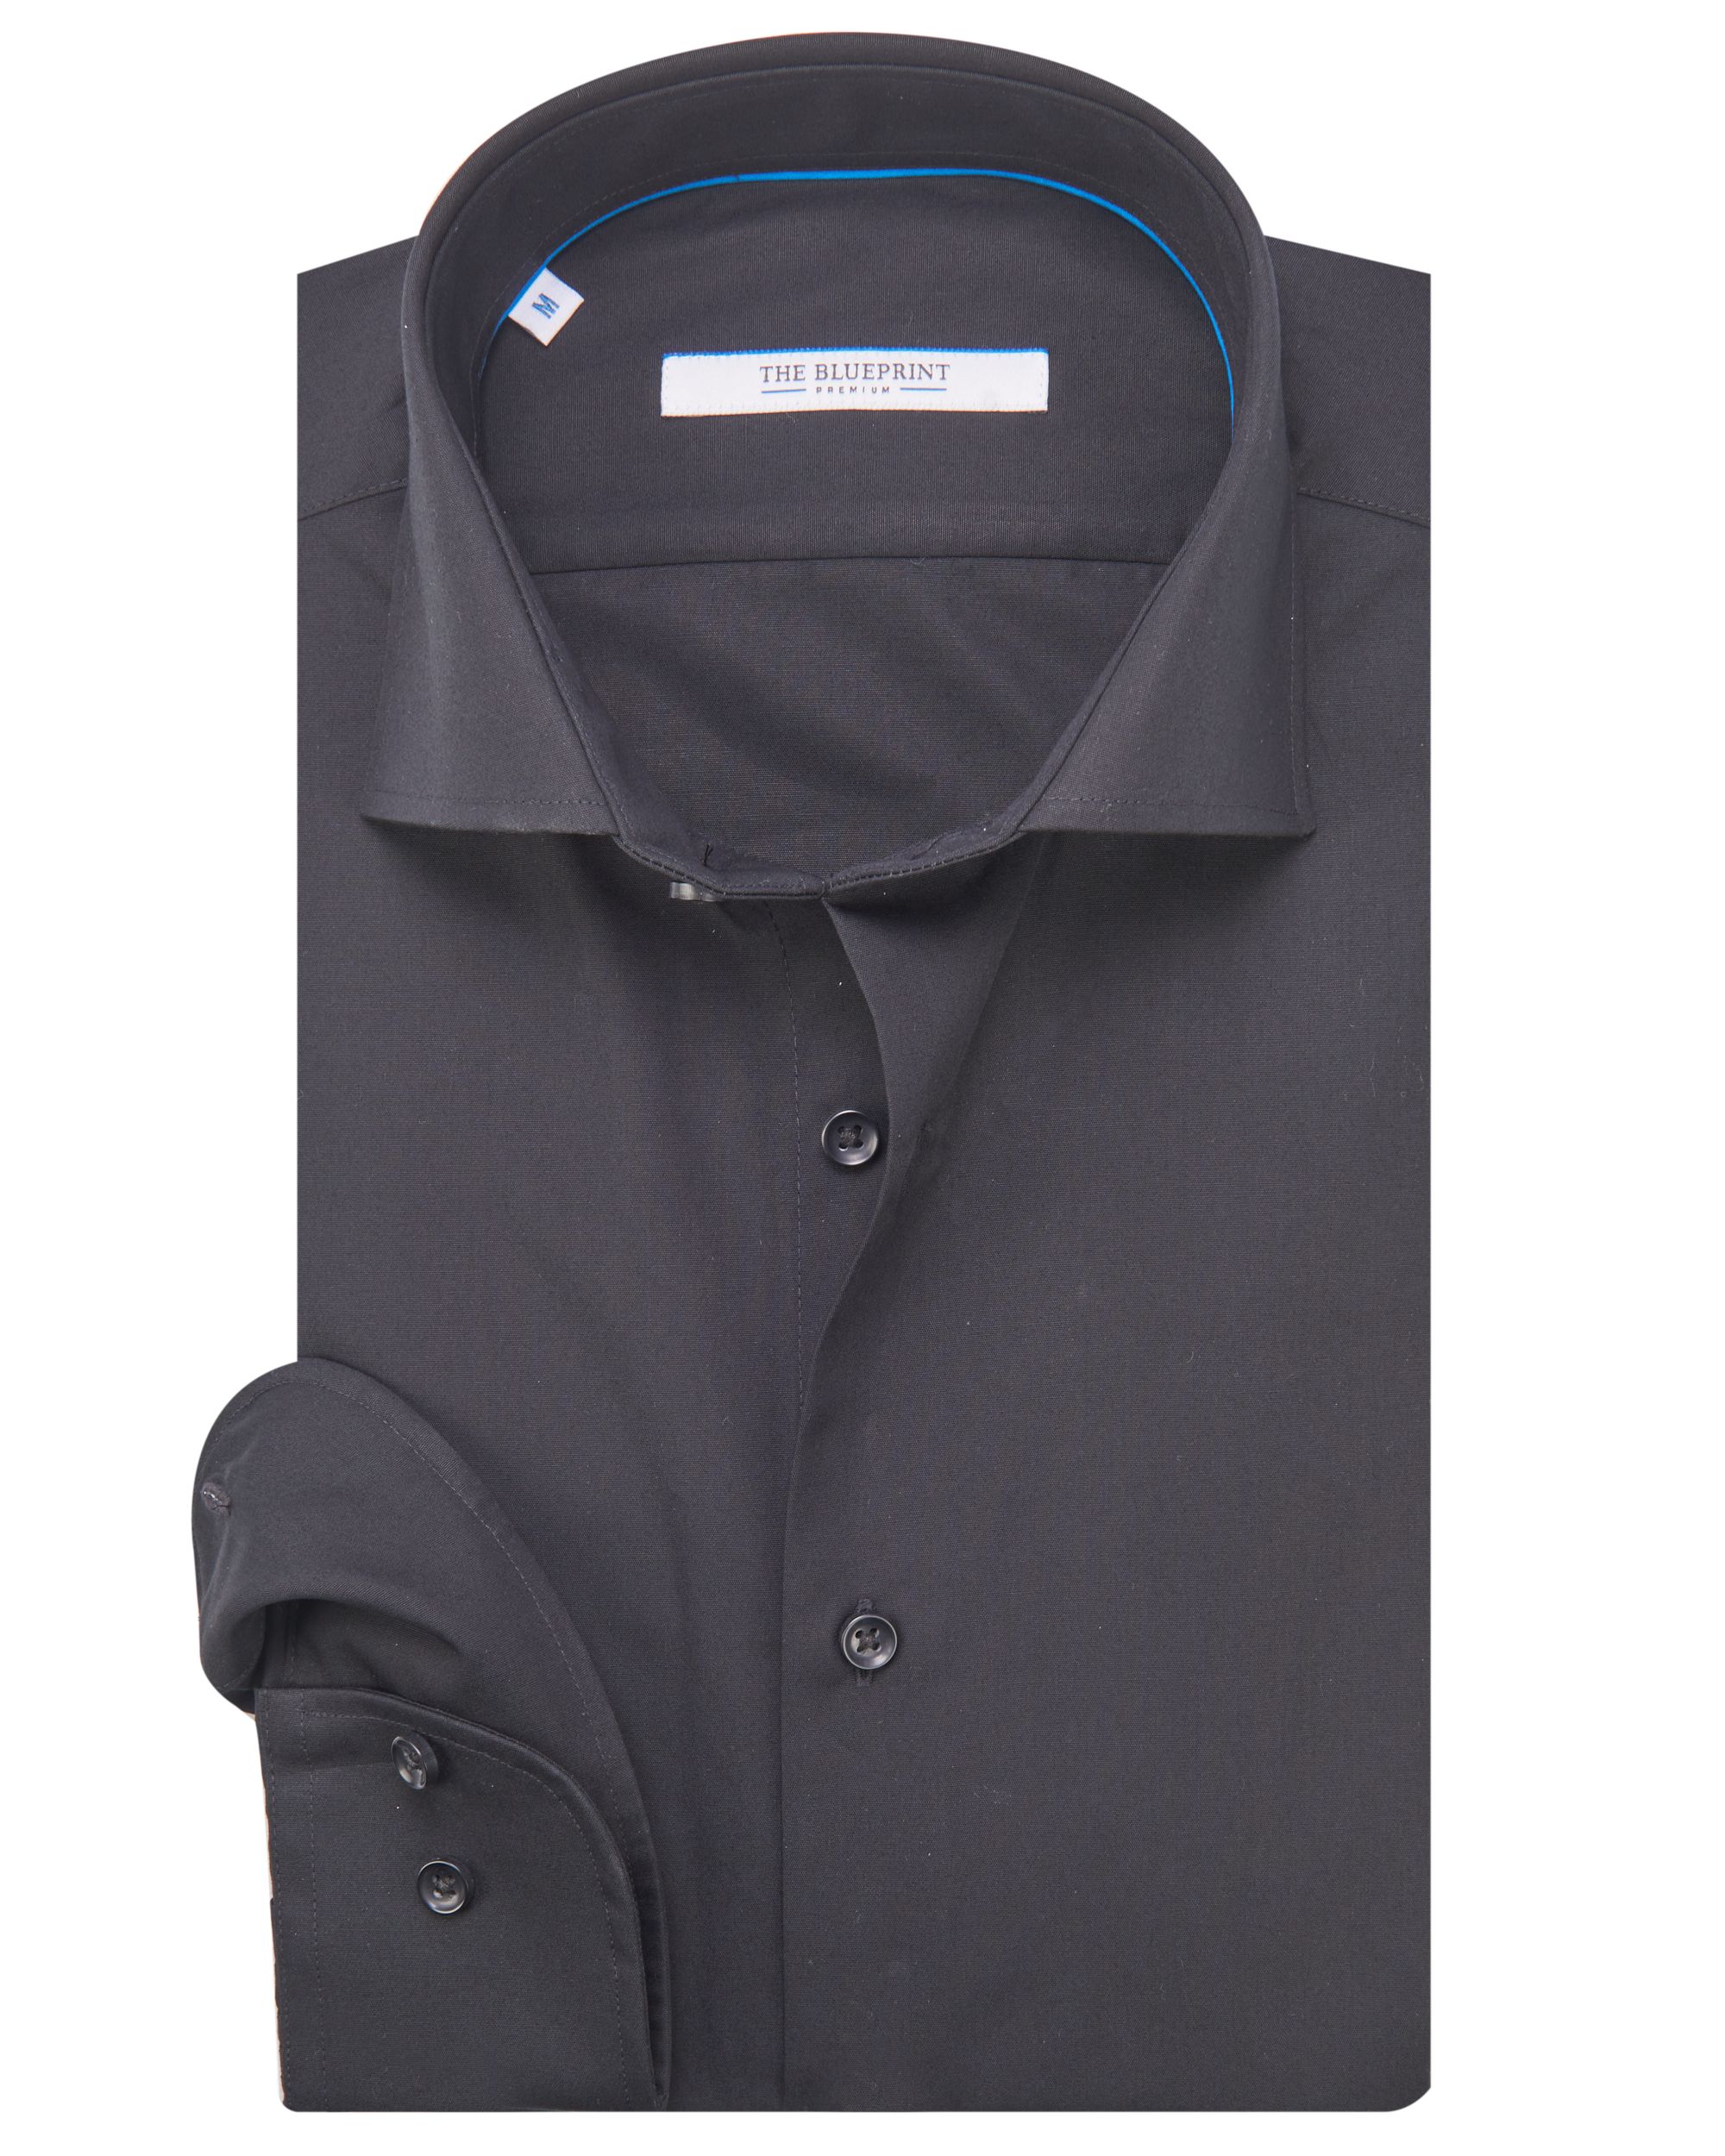 The BLUEPRINT Premium Casual Overhemd LM Black 082250-001-L